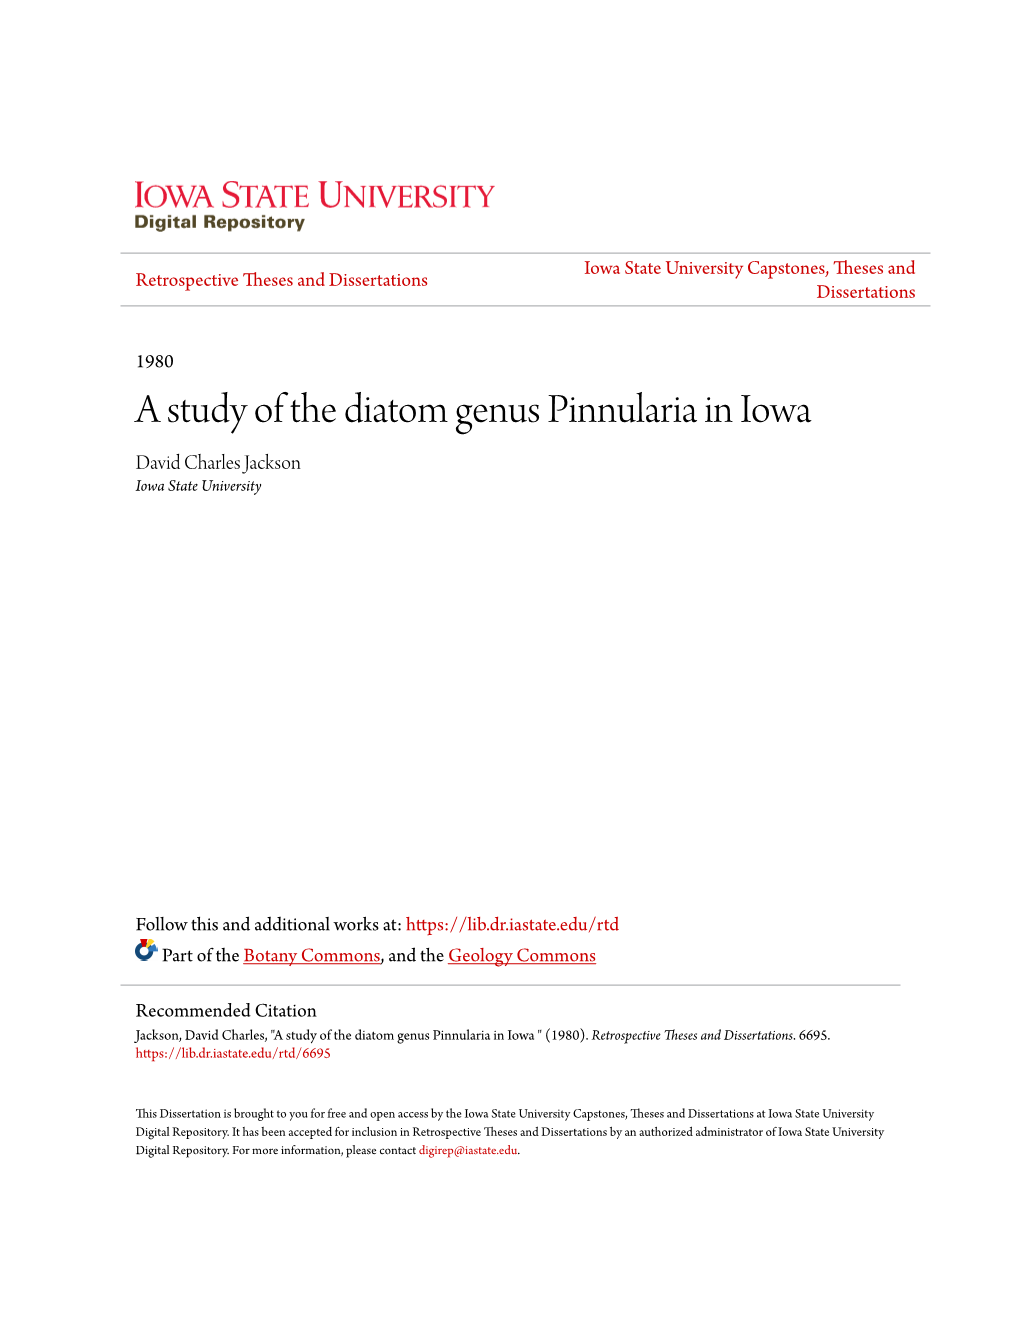 A Study of the Diatom Genus Pinnularia in Iowa David Charles Jackson Iowa State University